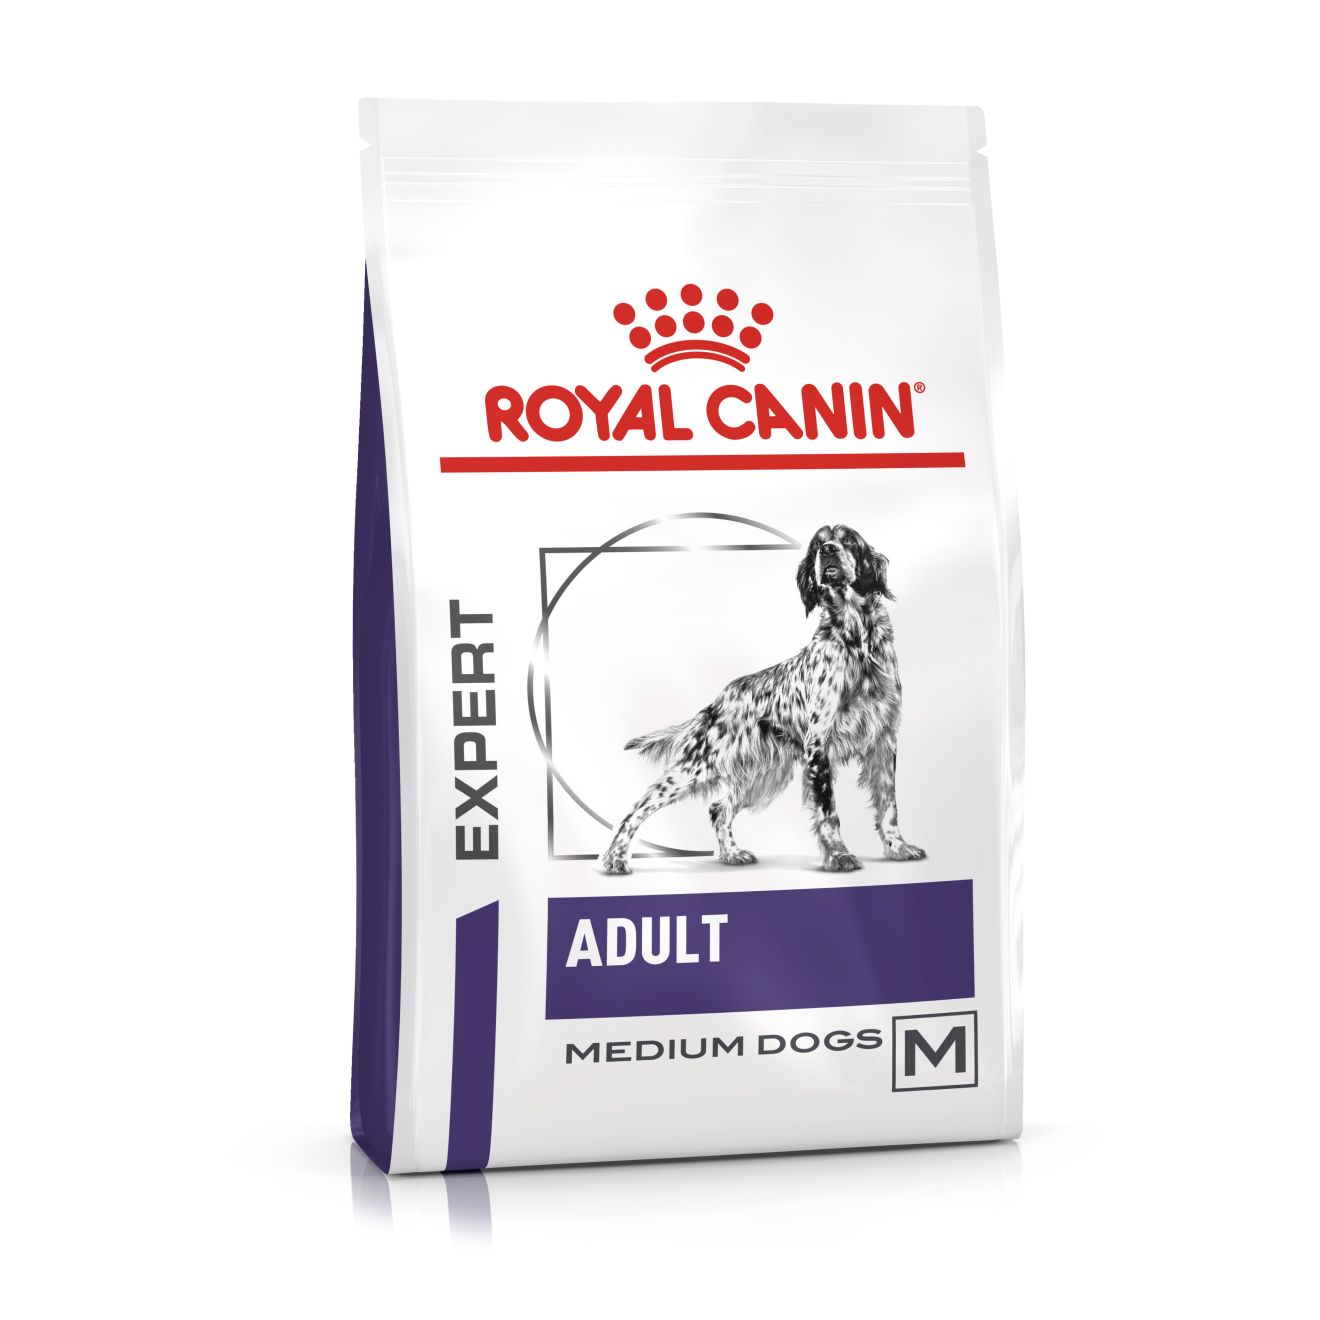 ROYAL CANIN Expert ADULT MEDIUM DOGS Trockenfutter für Hunde 10 kg